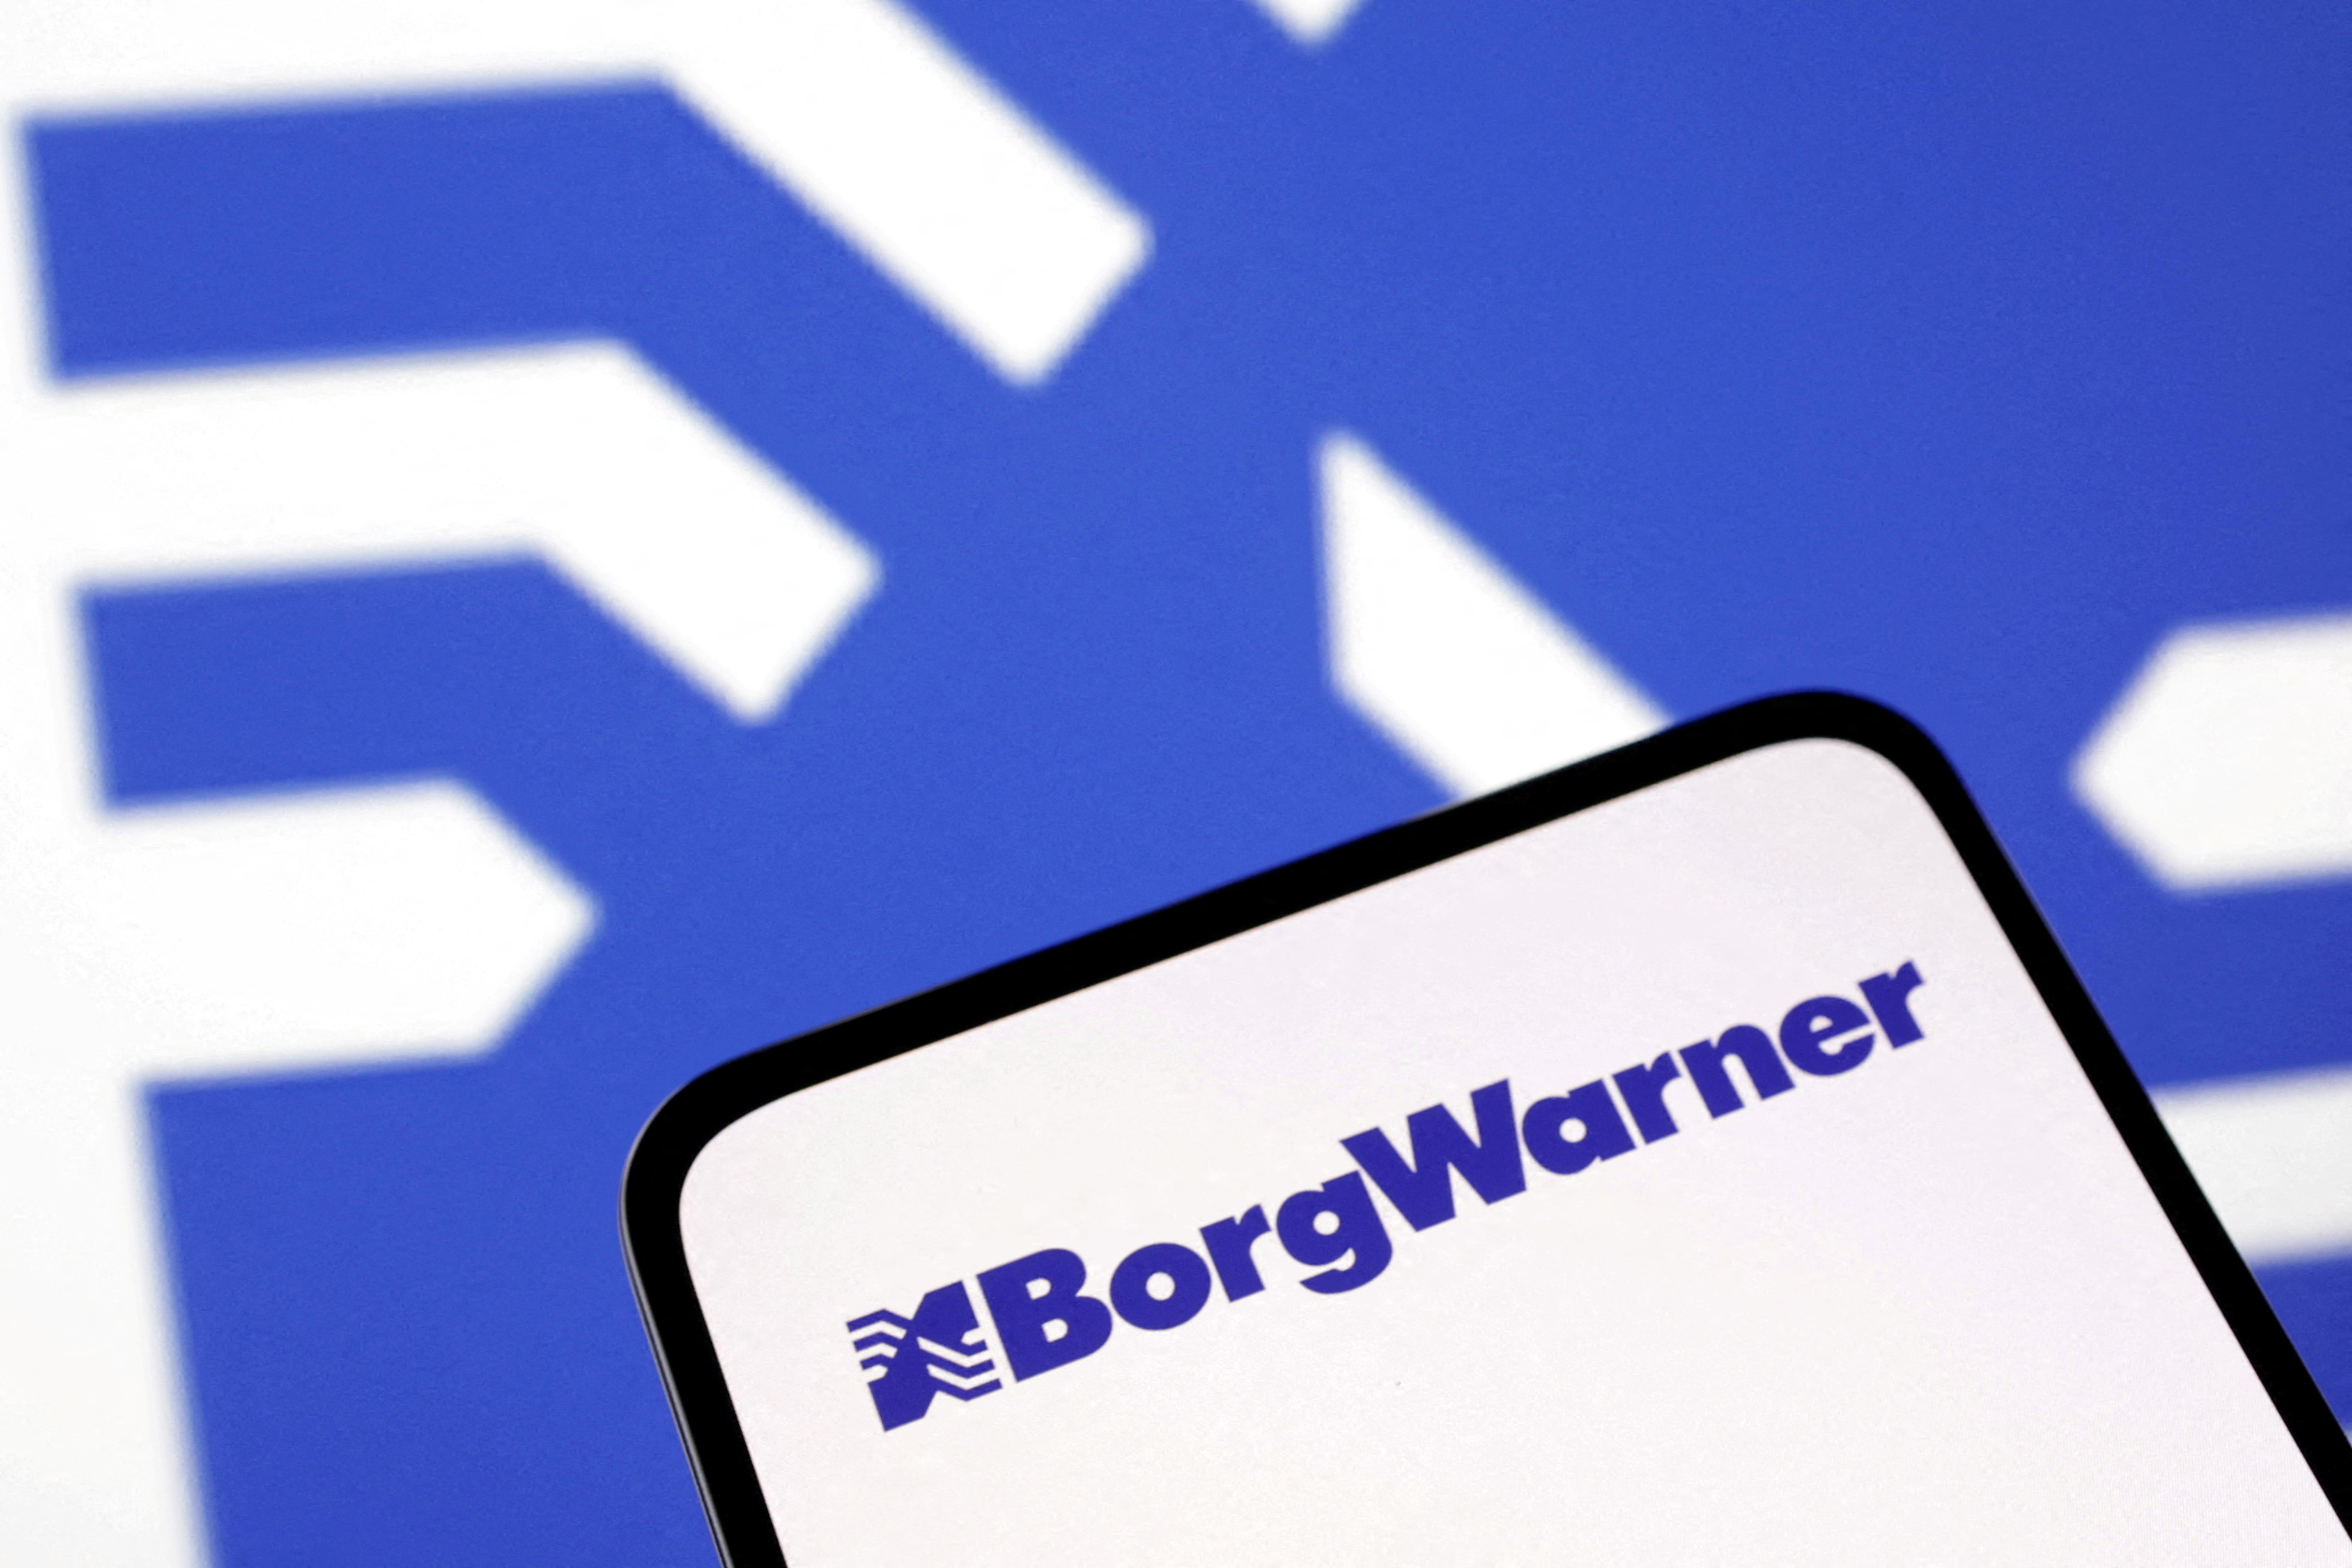 Illustration shows BorgWarner Inc logo